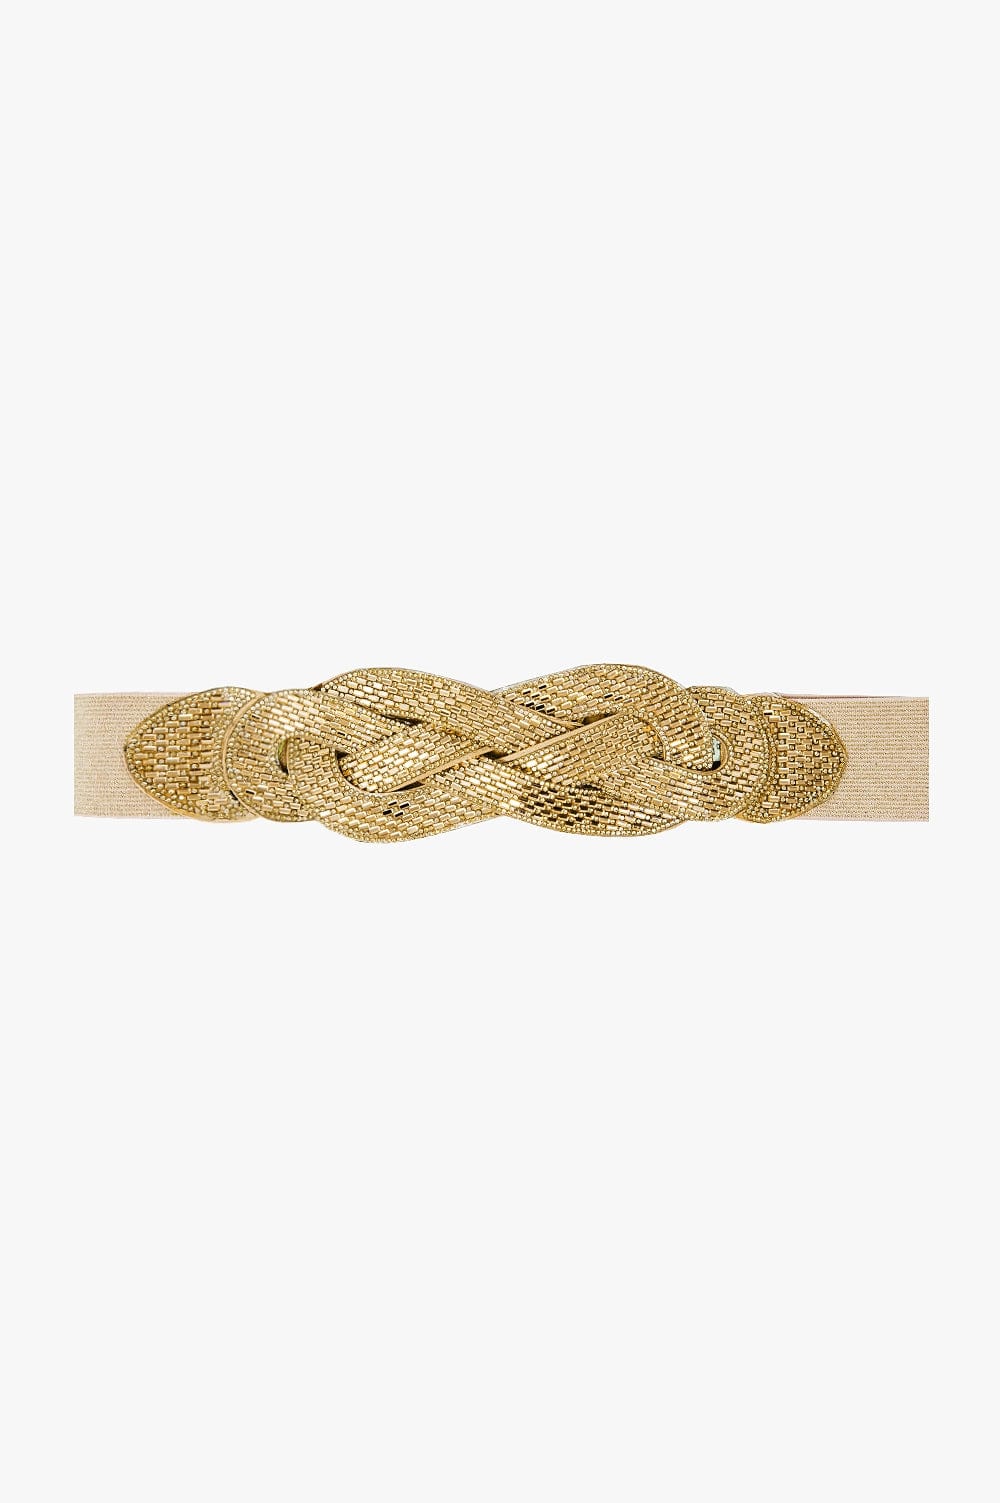 Q2 Women's Belt One Size / Gold Beige Belt With Gold Woven Detail